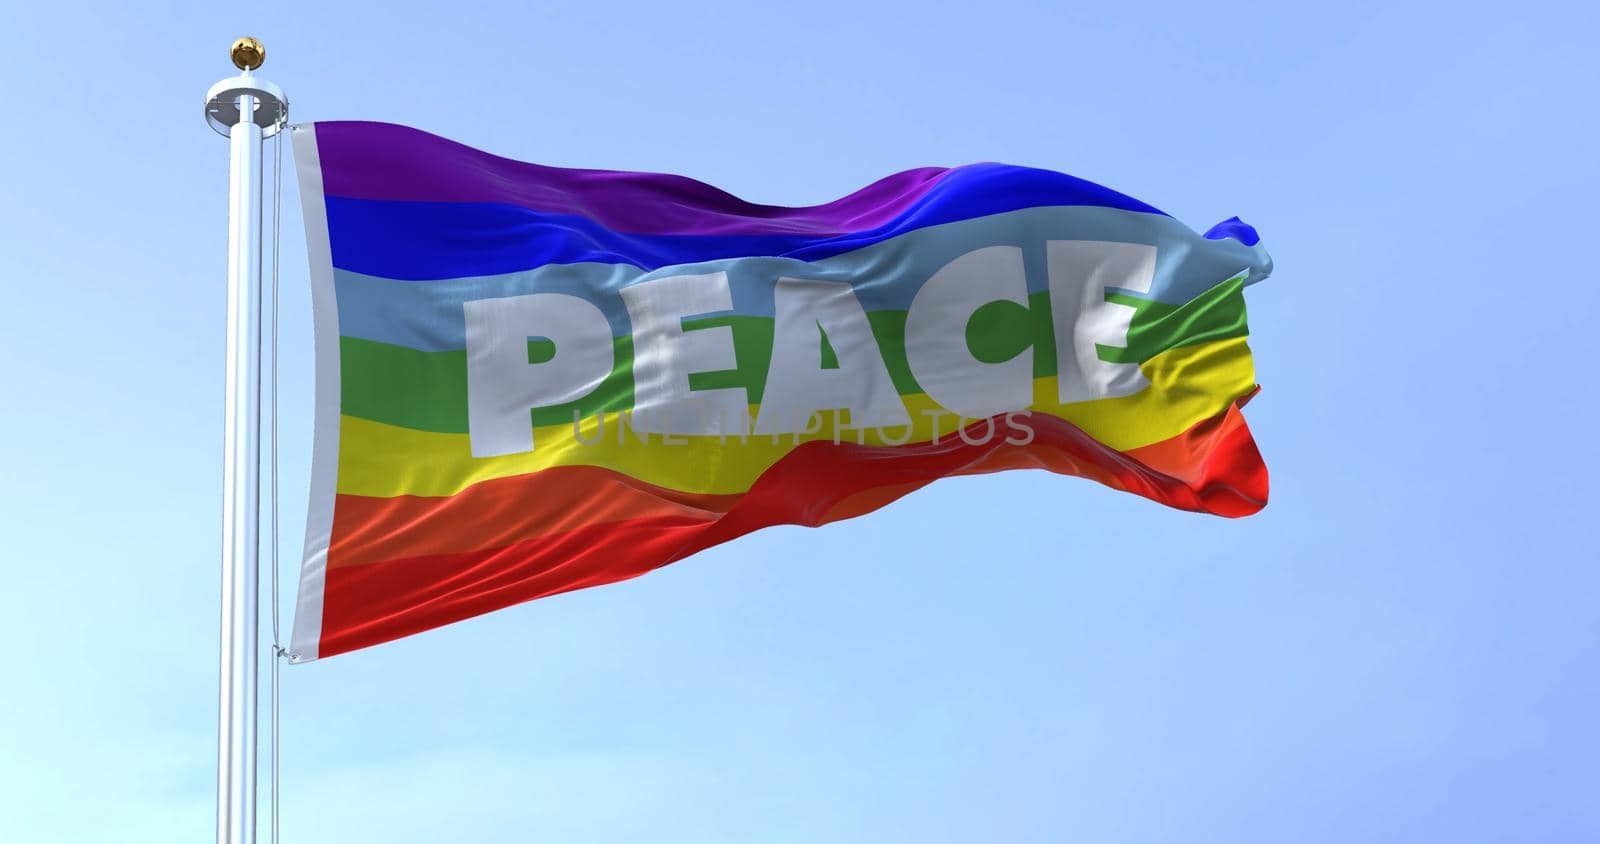 the rainbow flag of peace flying by rarrarorro